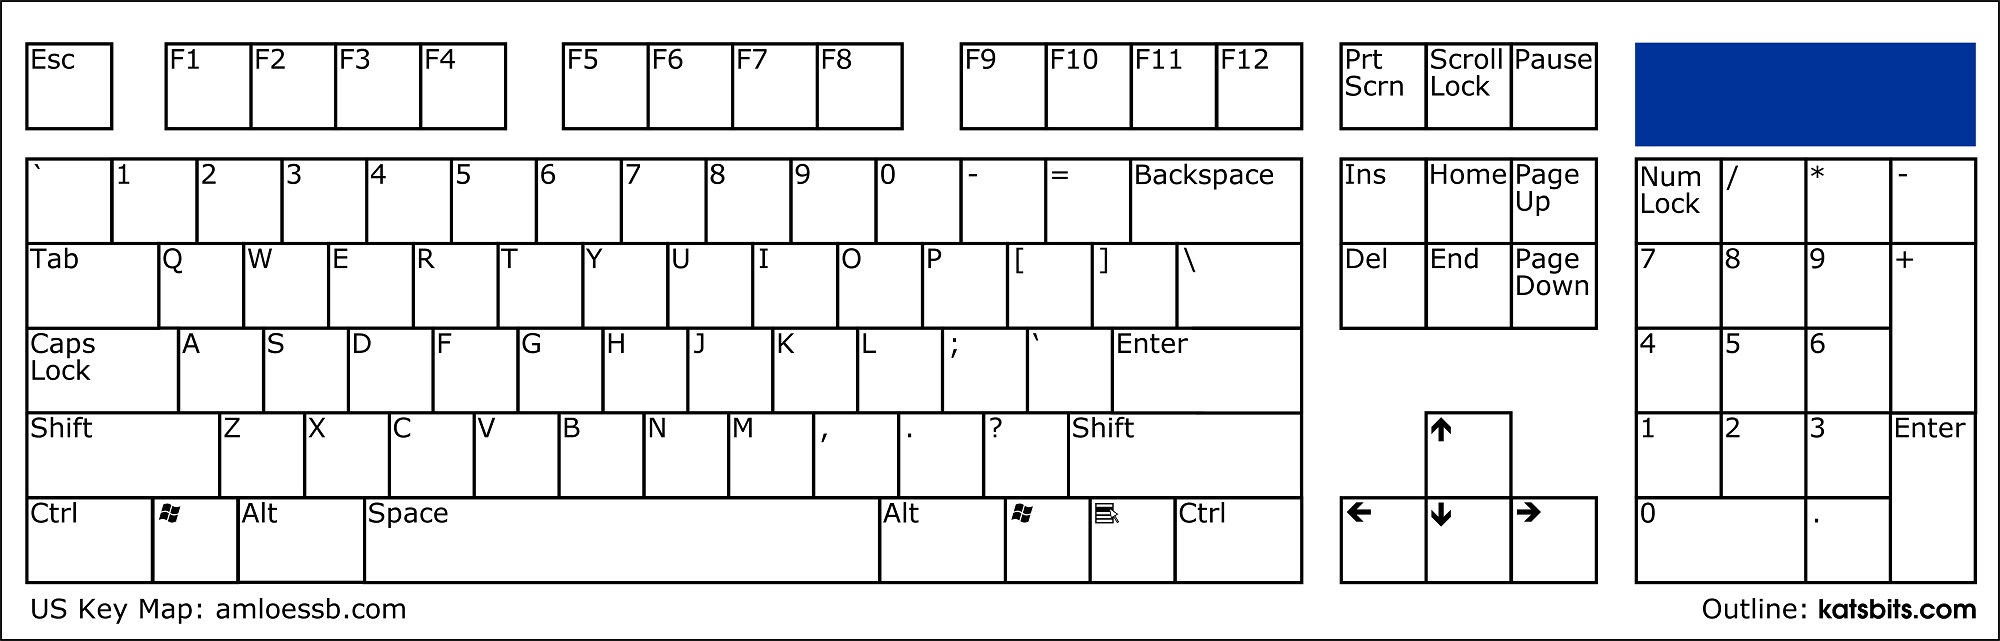 keyboard diagram blank.